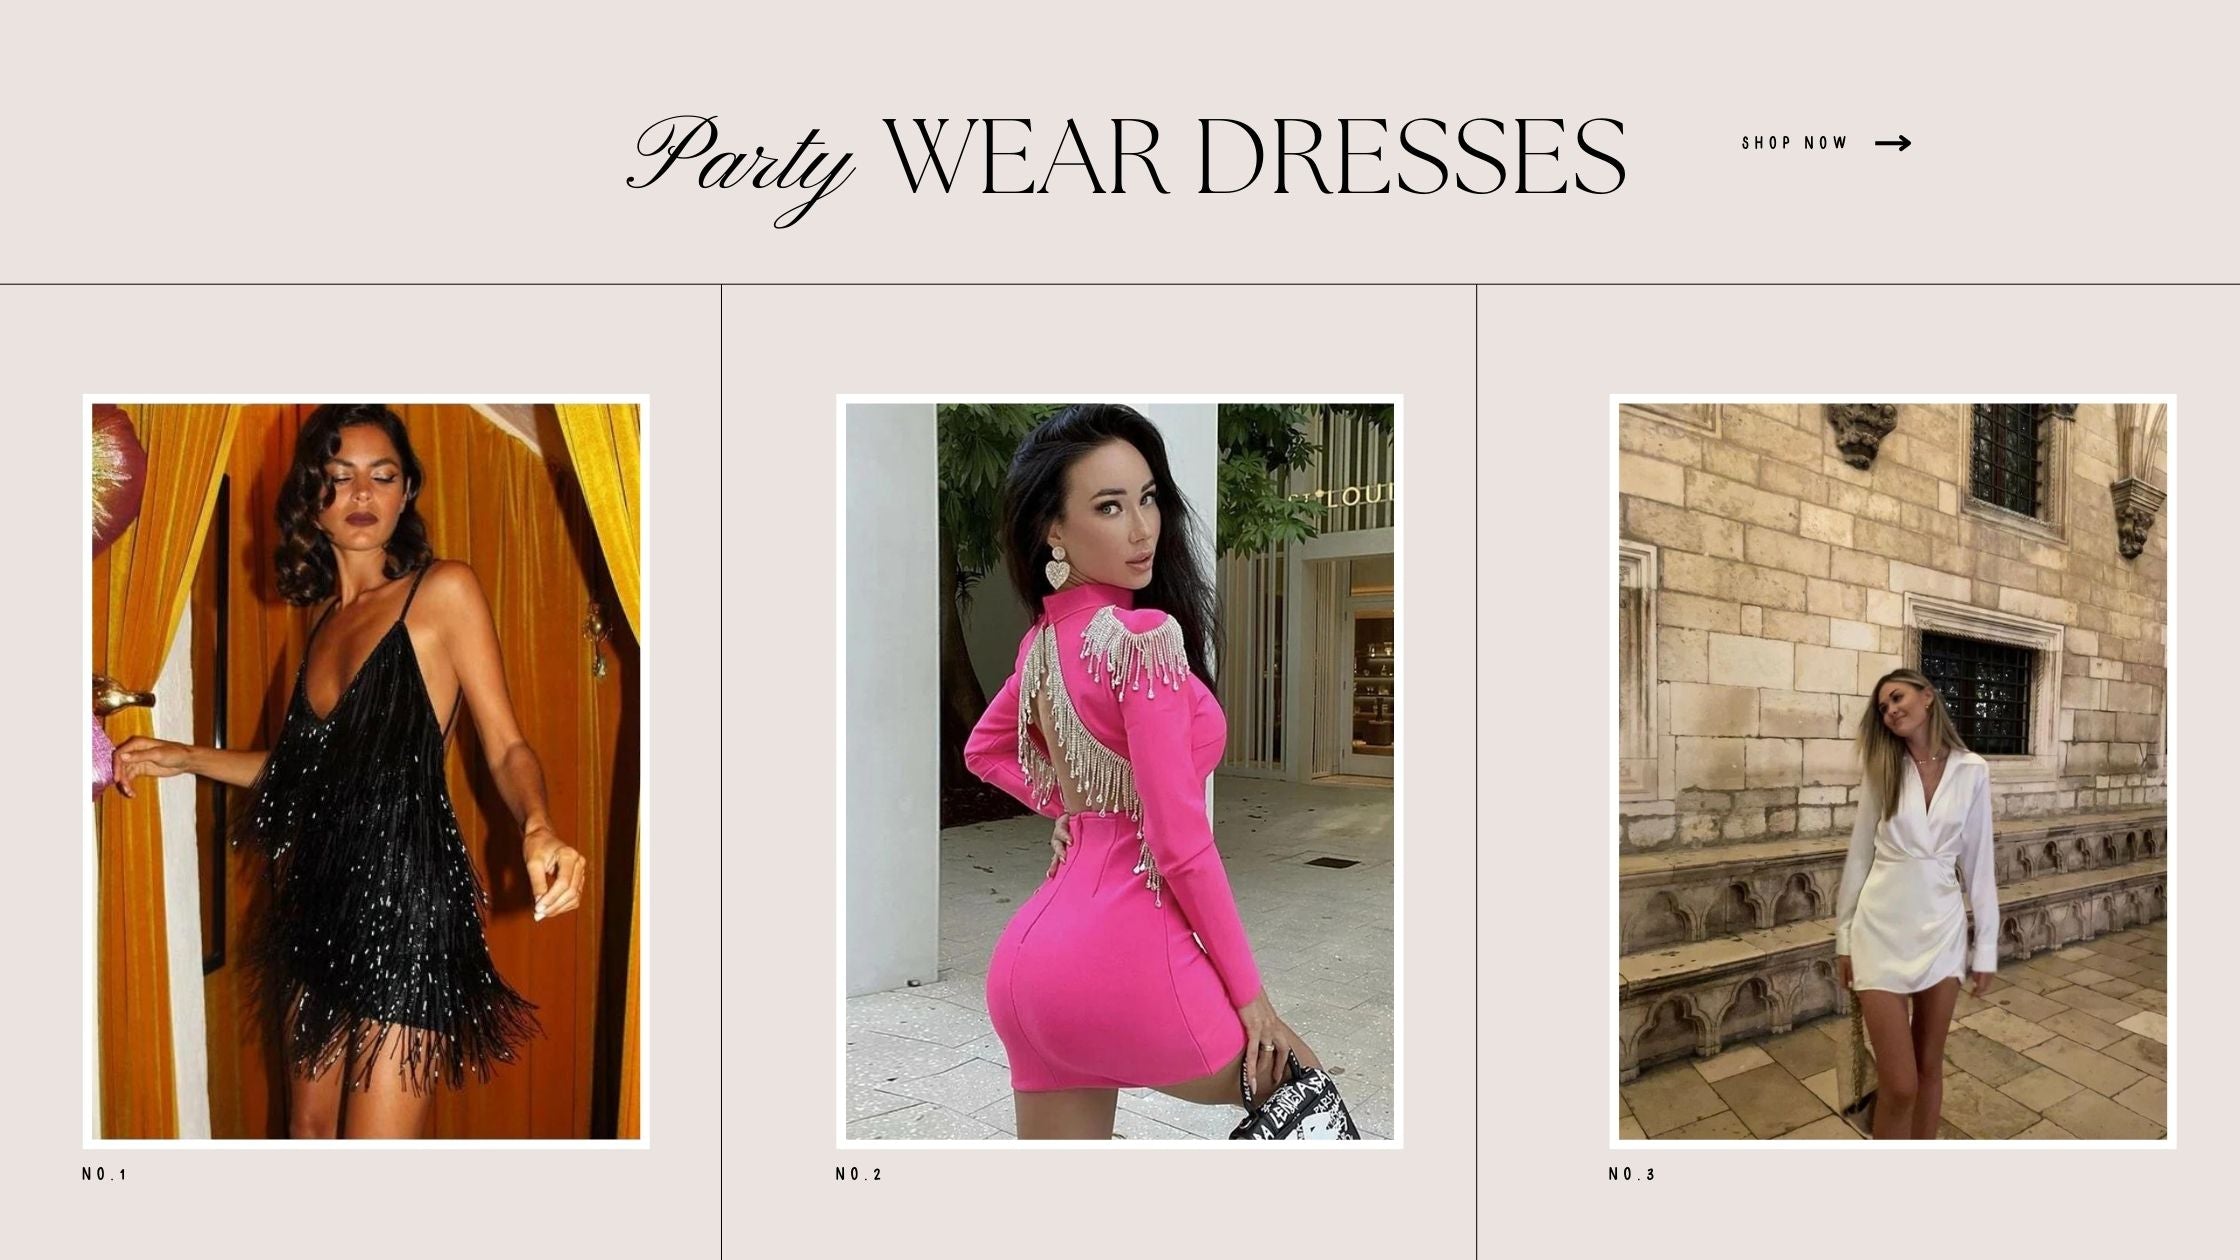 Dress to Impress: 5 Party Wear Dresses for Women